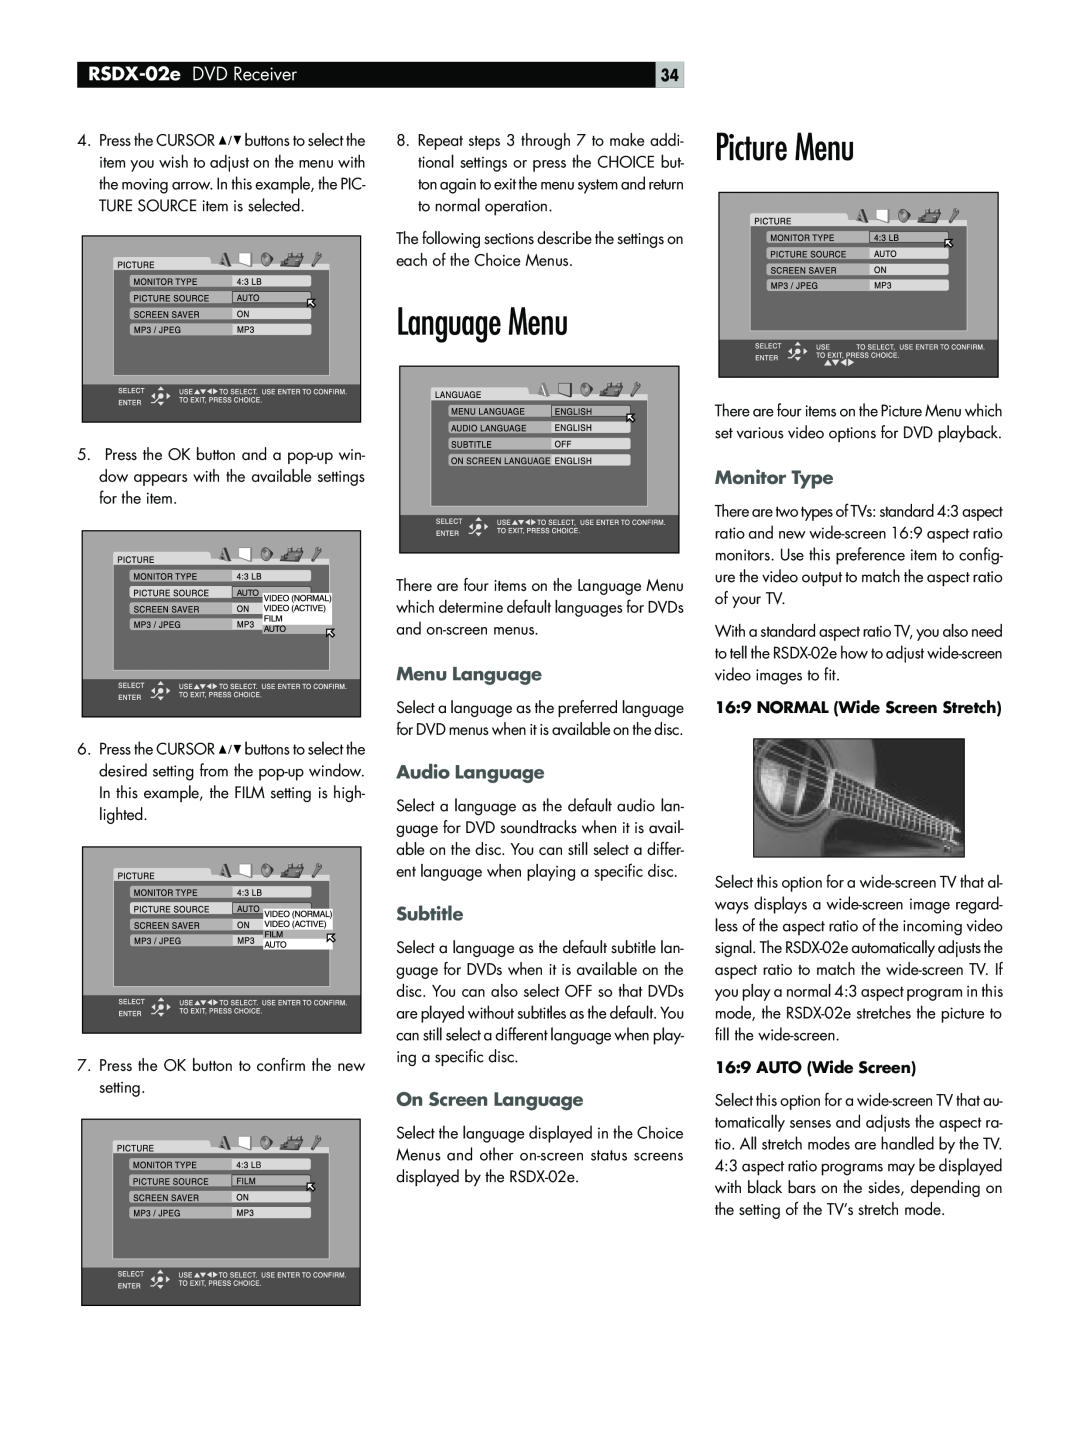 Rotel RSDX-02e Language Menu, Picture Menu, Menu Language, Audio Language, Subtitle, On Screen Language, Monitor Type 